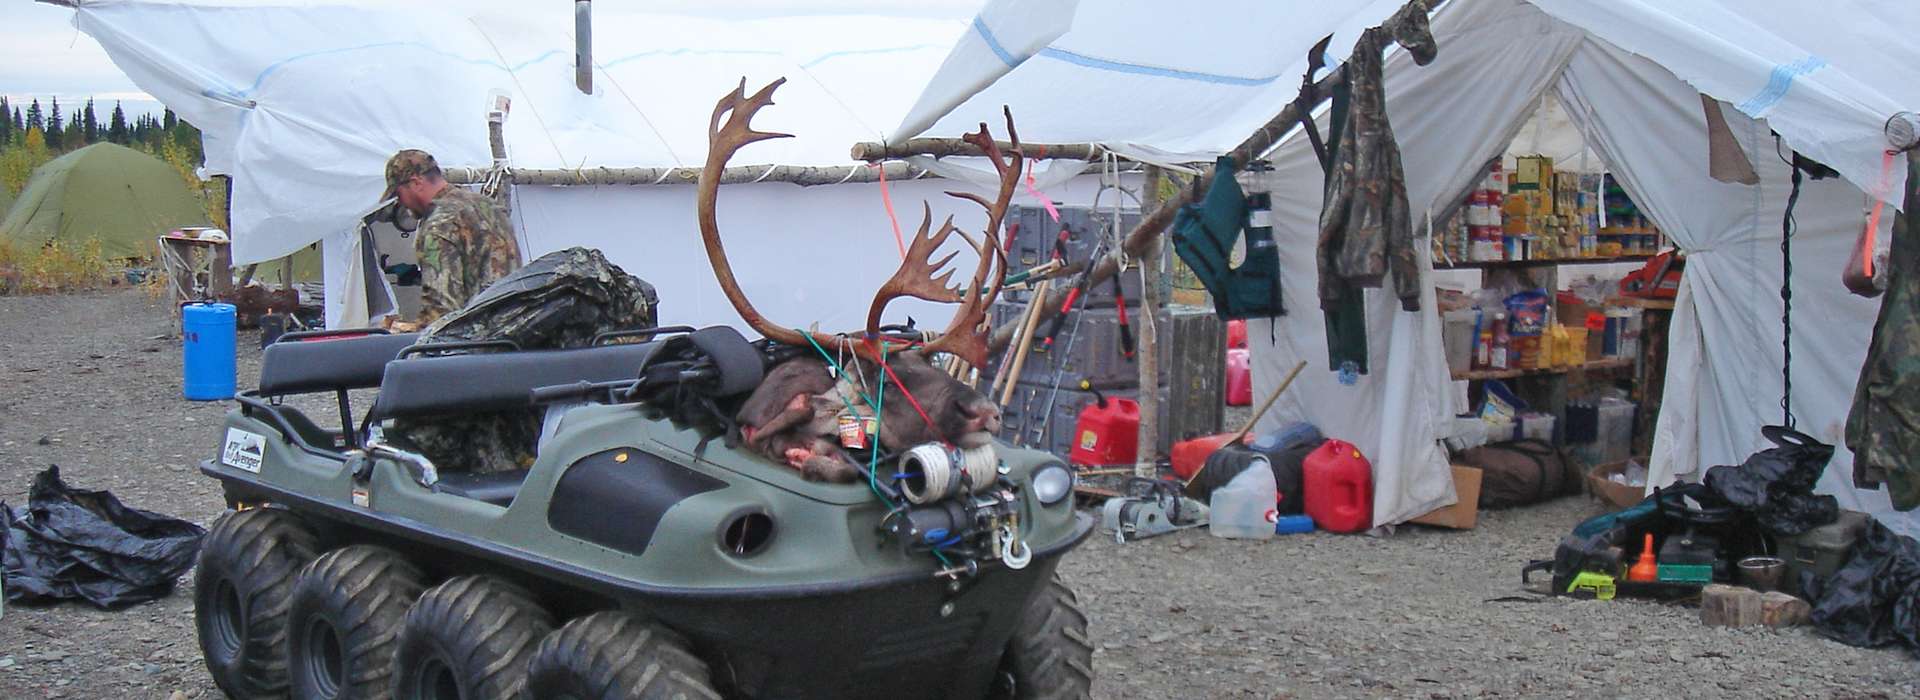 Unguided Moose Hunts